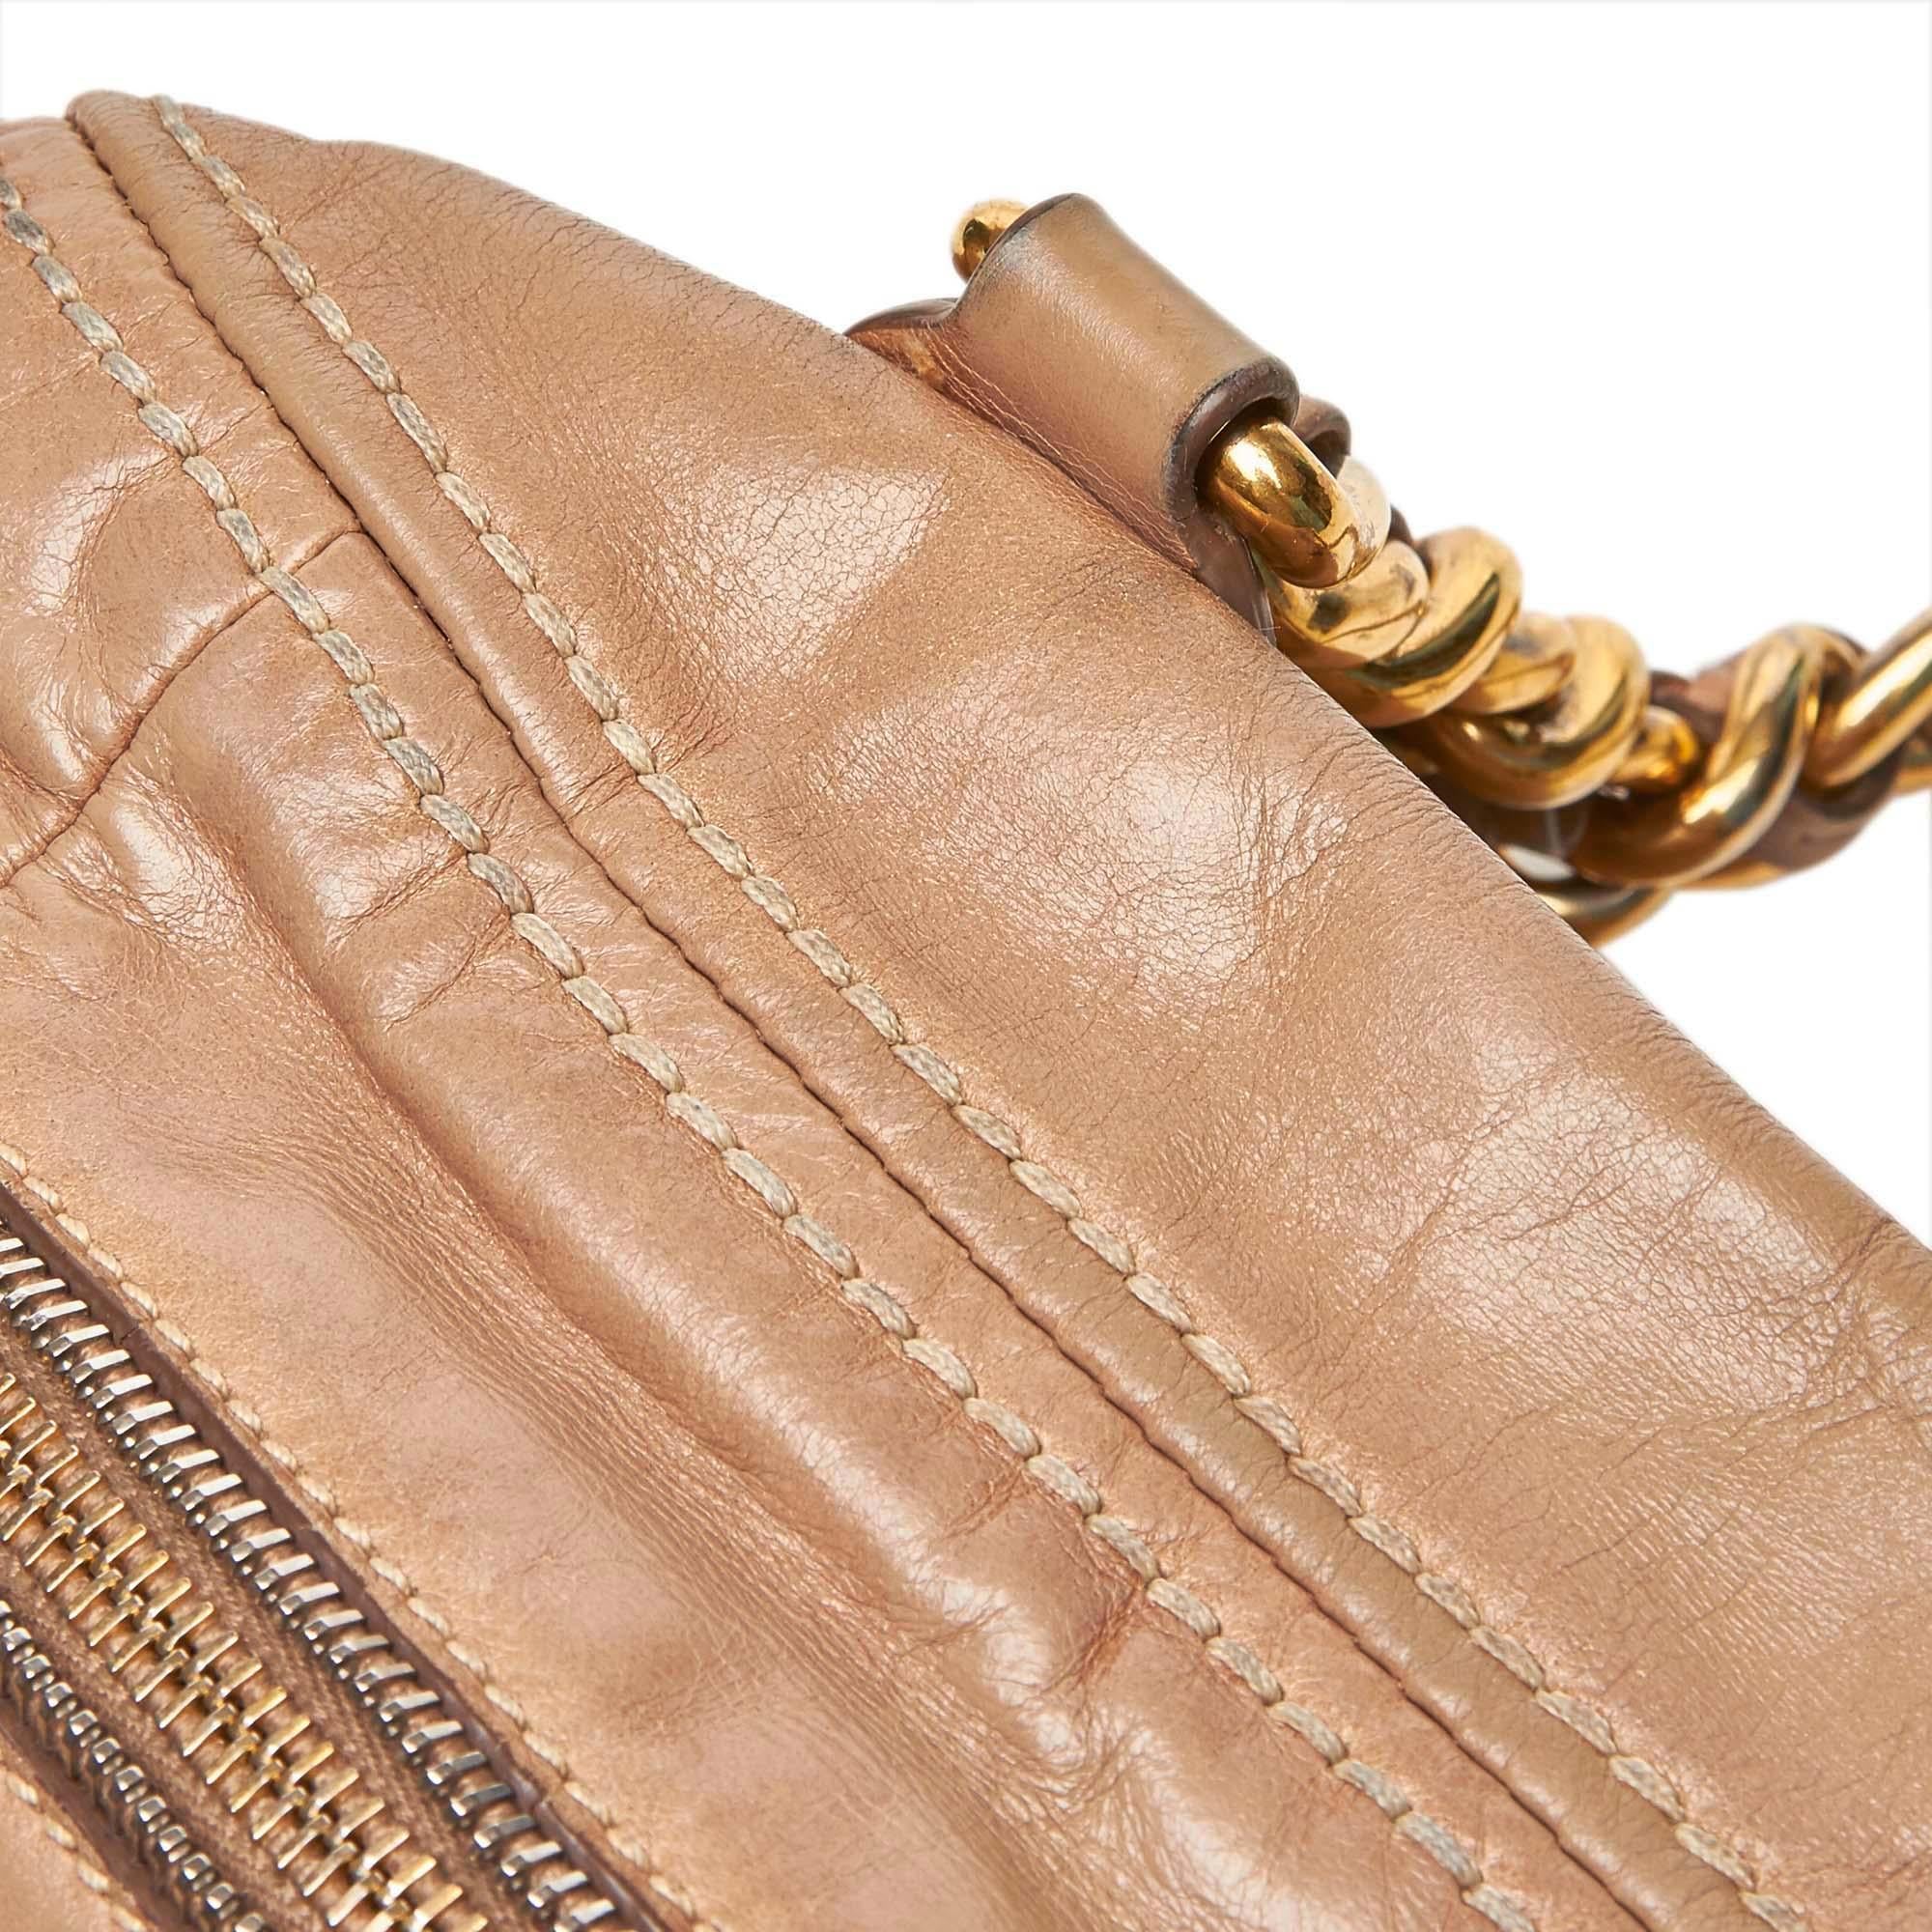 Vintage Authentic Prada Leather Handbag w Dust Bag Authenticity Card MEDIUM  3